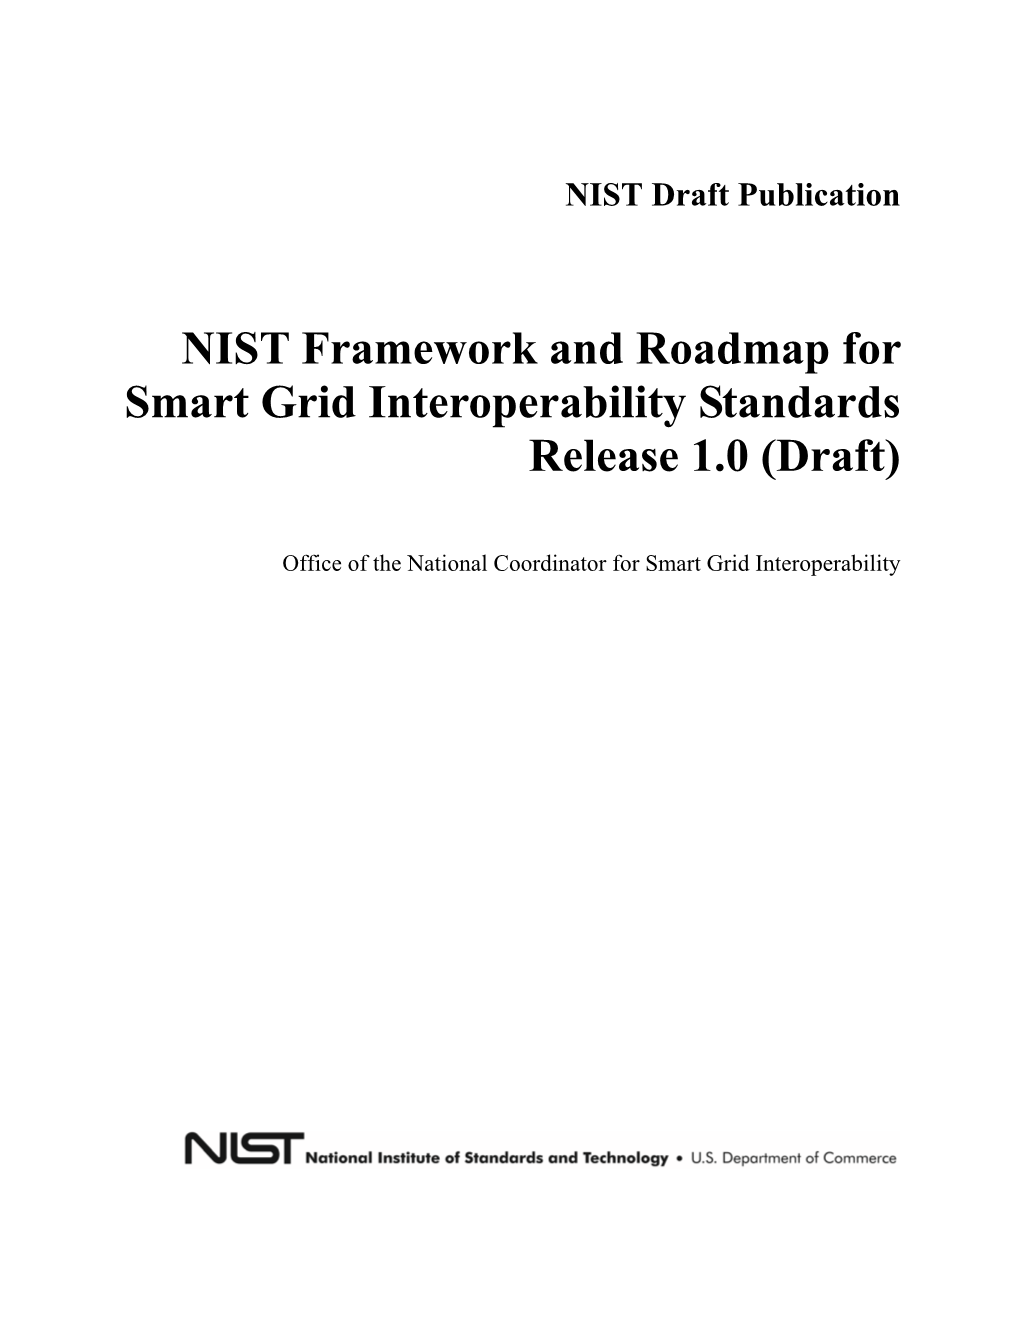 NIST Framework and Roadmap for Smart Grid Interoperability Standards Release 1.0 (Draft)